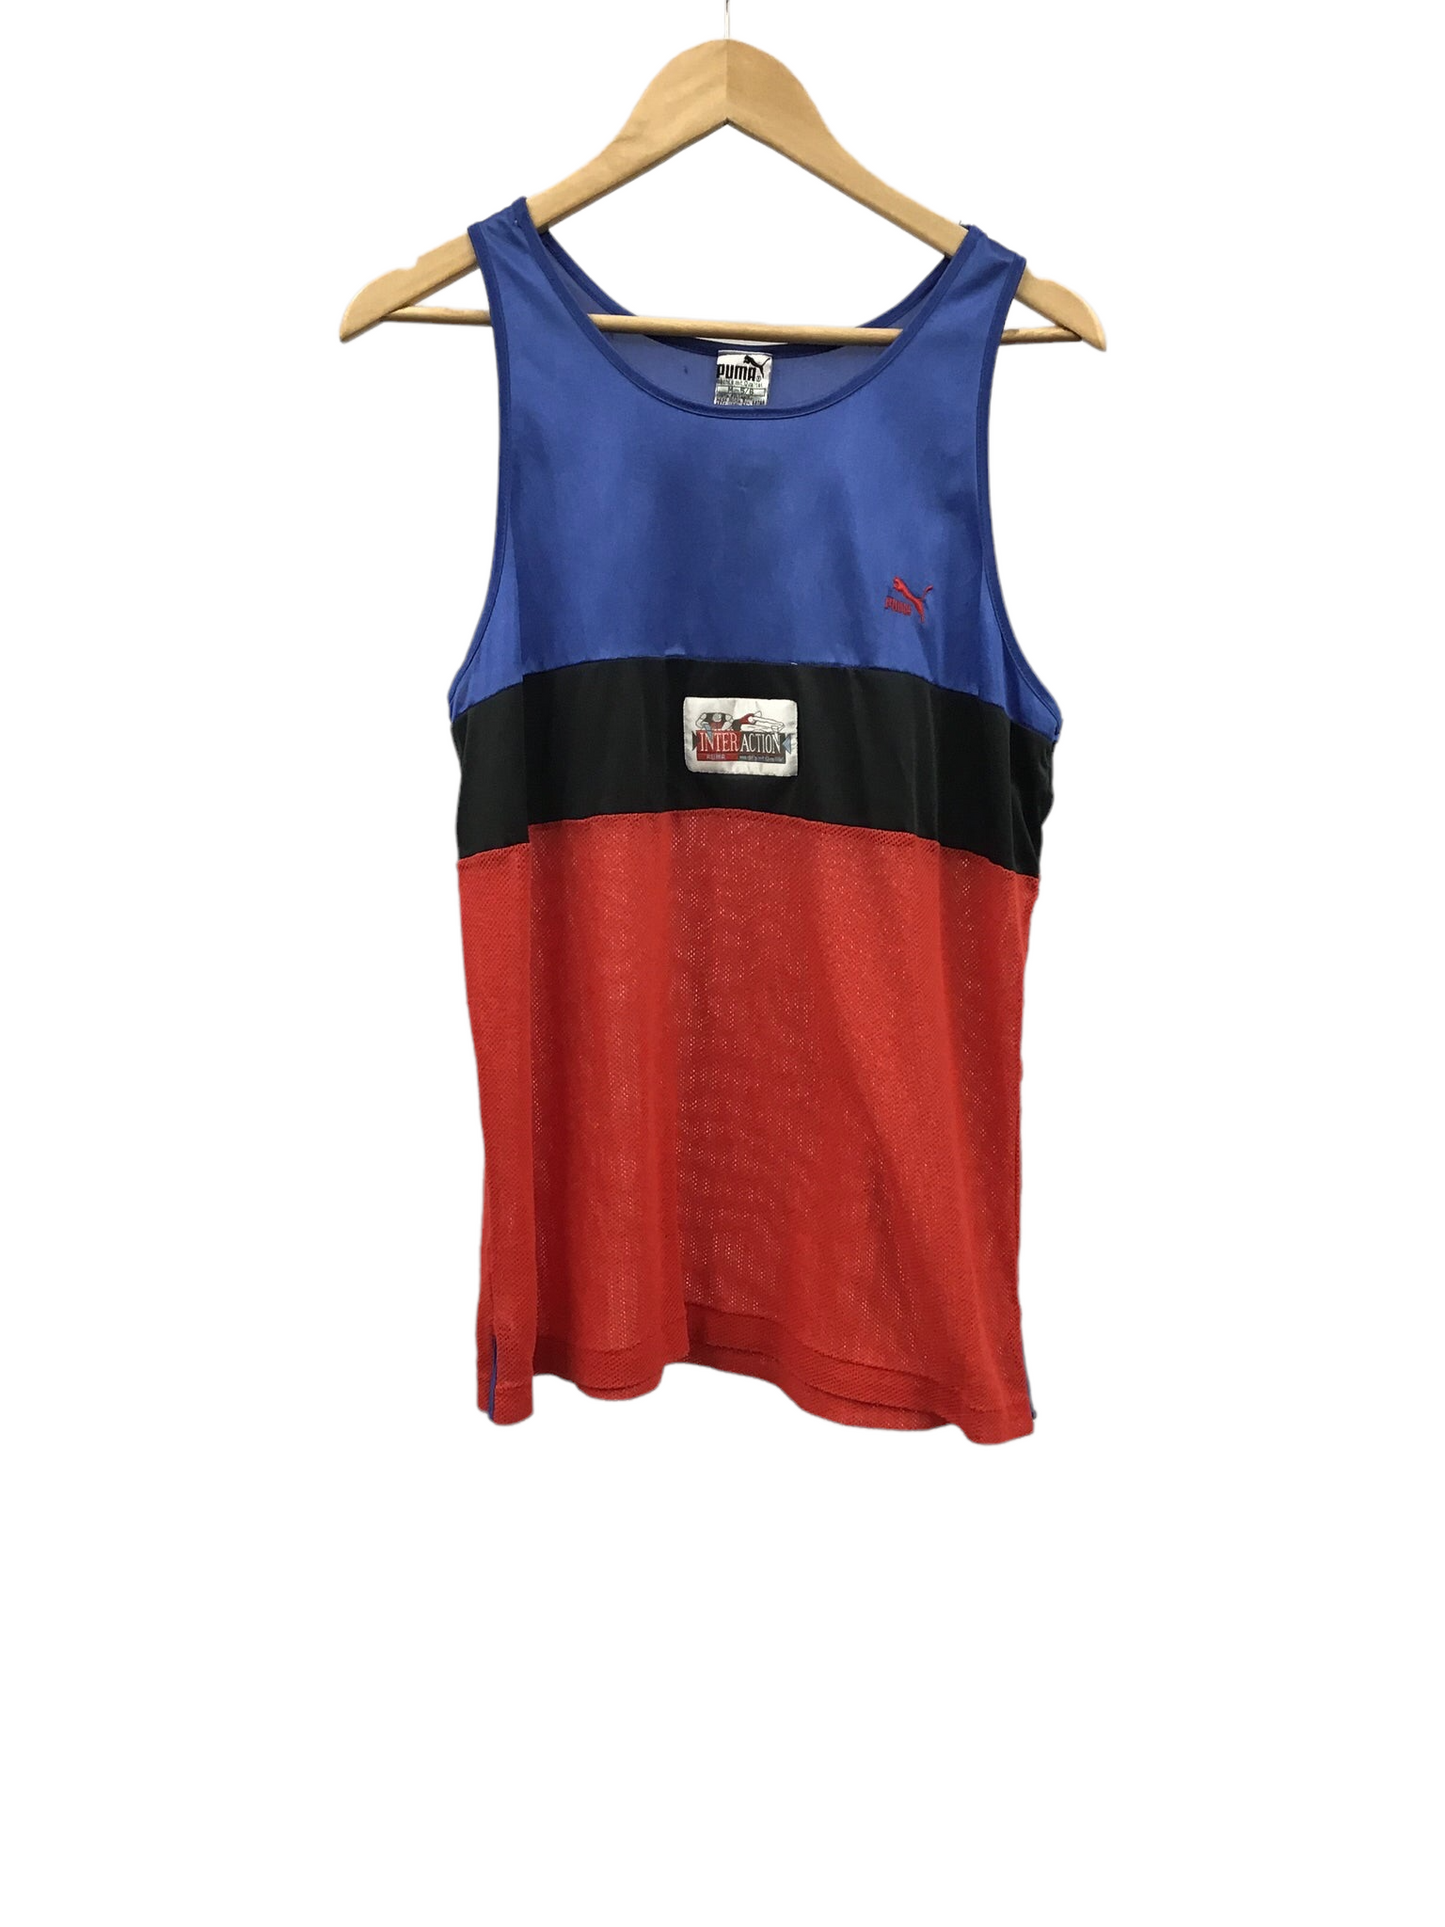 Puma Sports Vest Top (Size M)